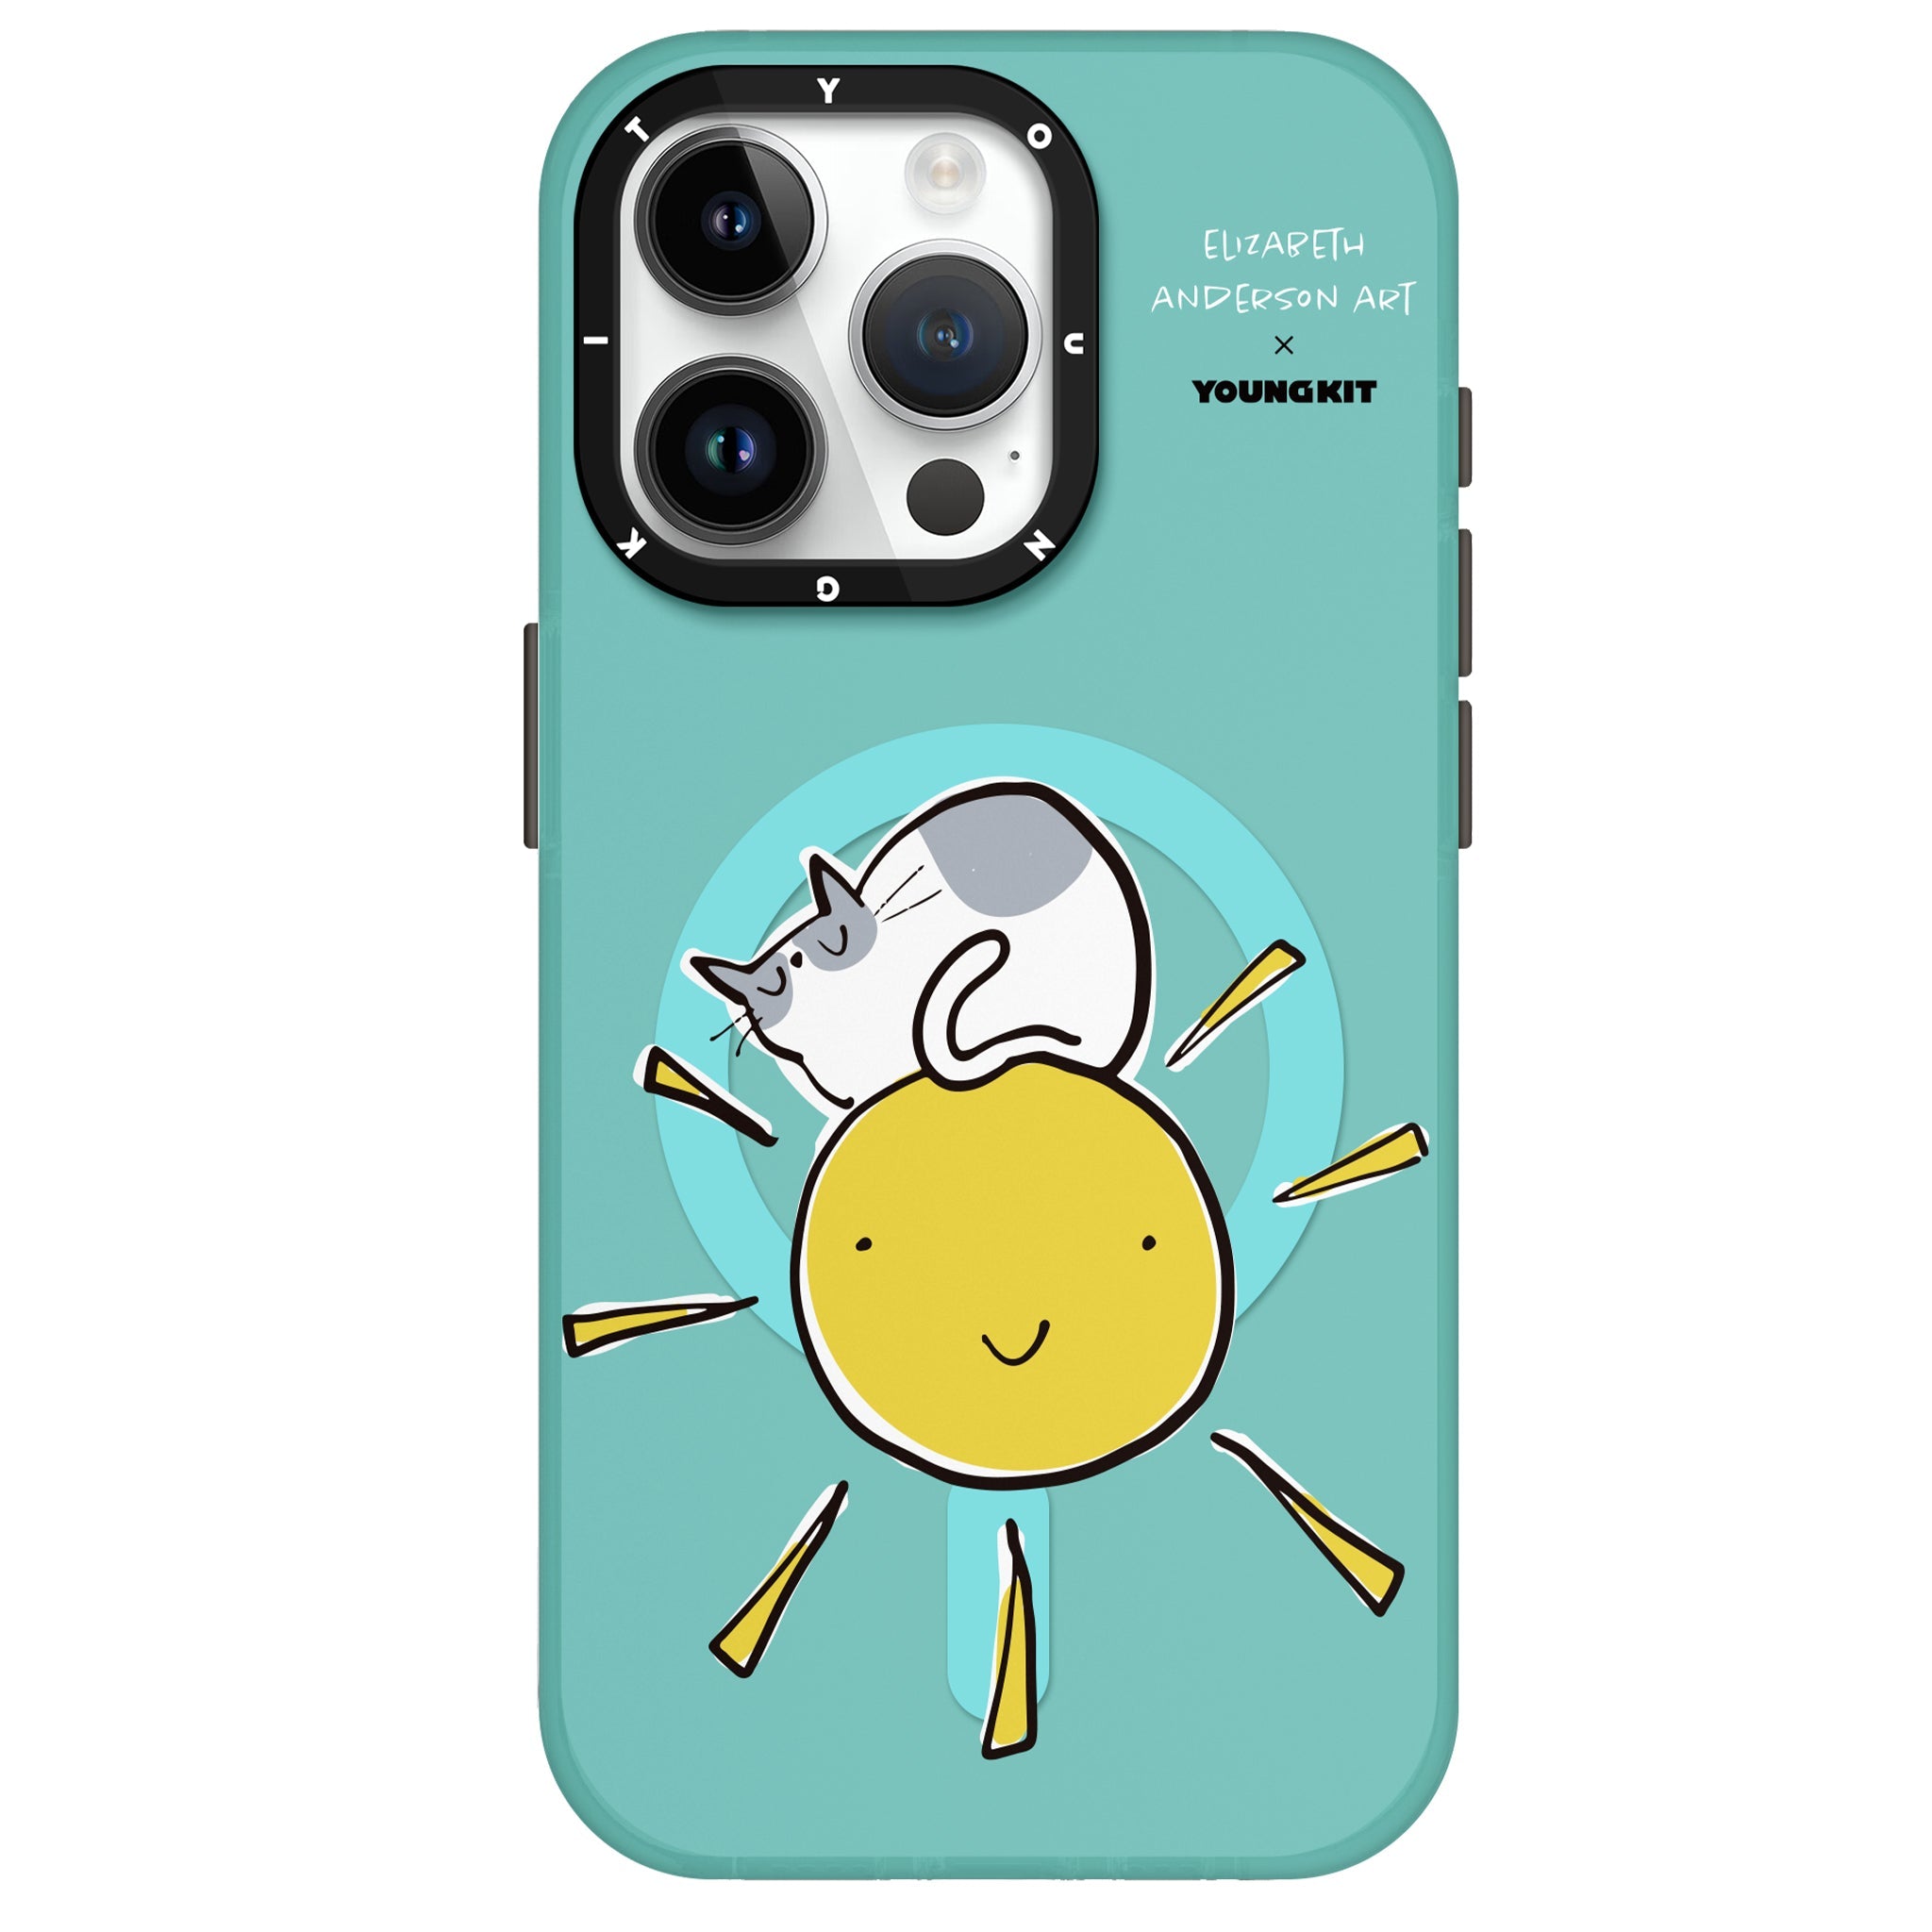 YOUNGKIT X Elizabeth Anderson Art MagSafe iPhone14/15 Case-Sunshine